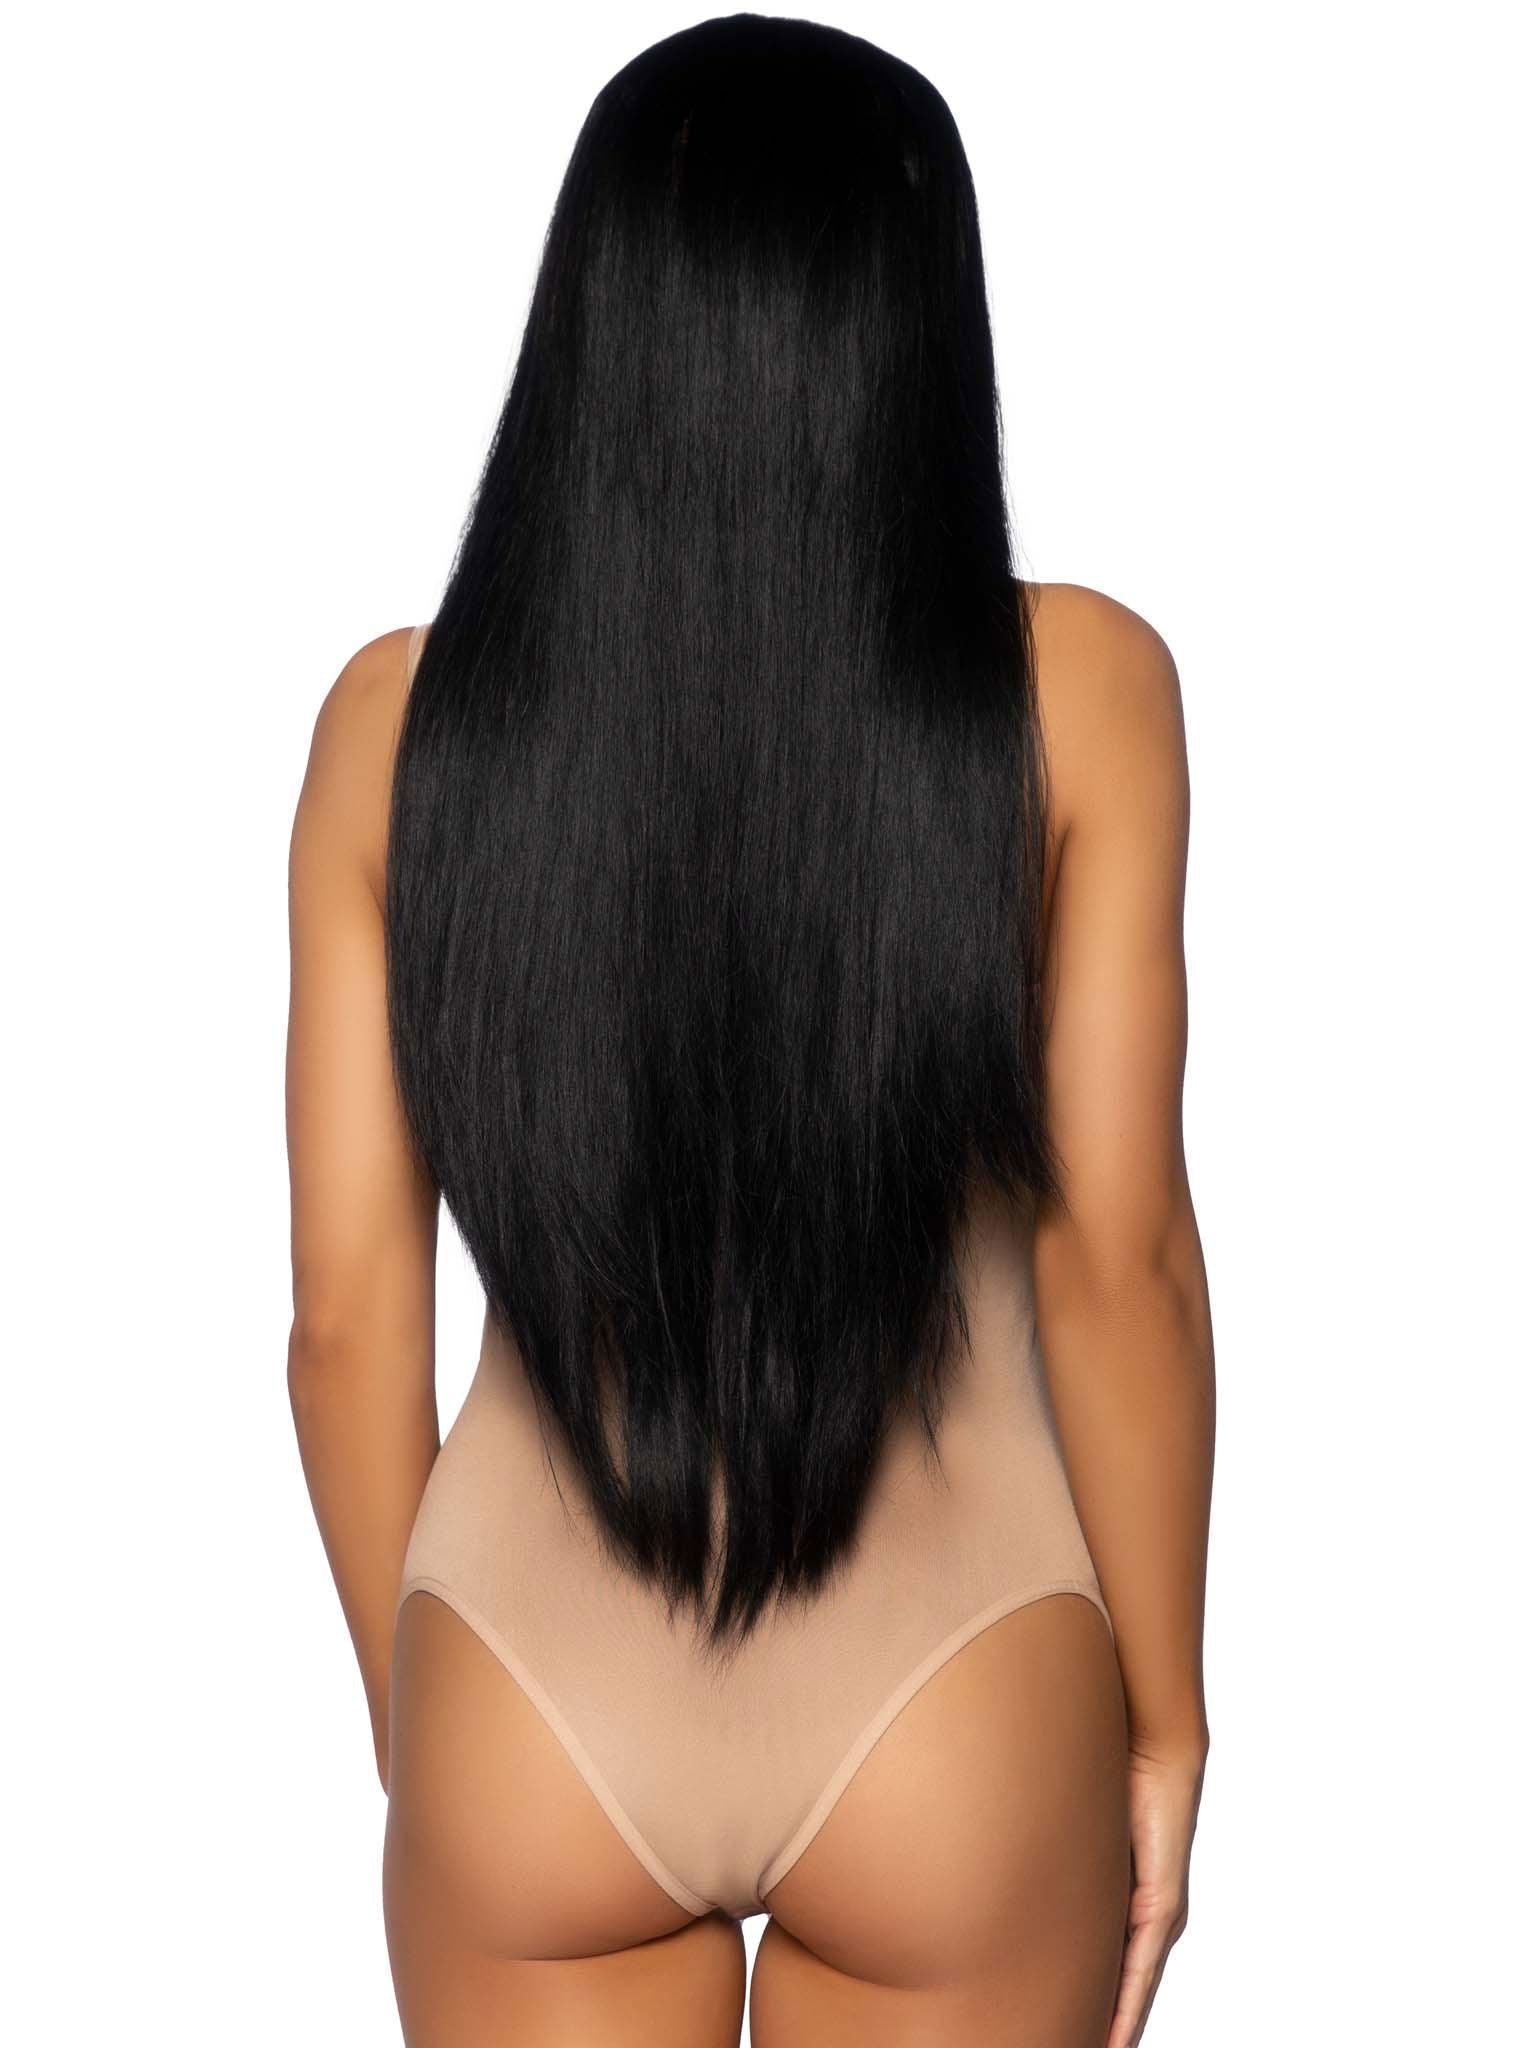 33 Inch Long Straight Wig - Black - My Sex Toy Hub